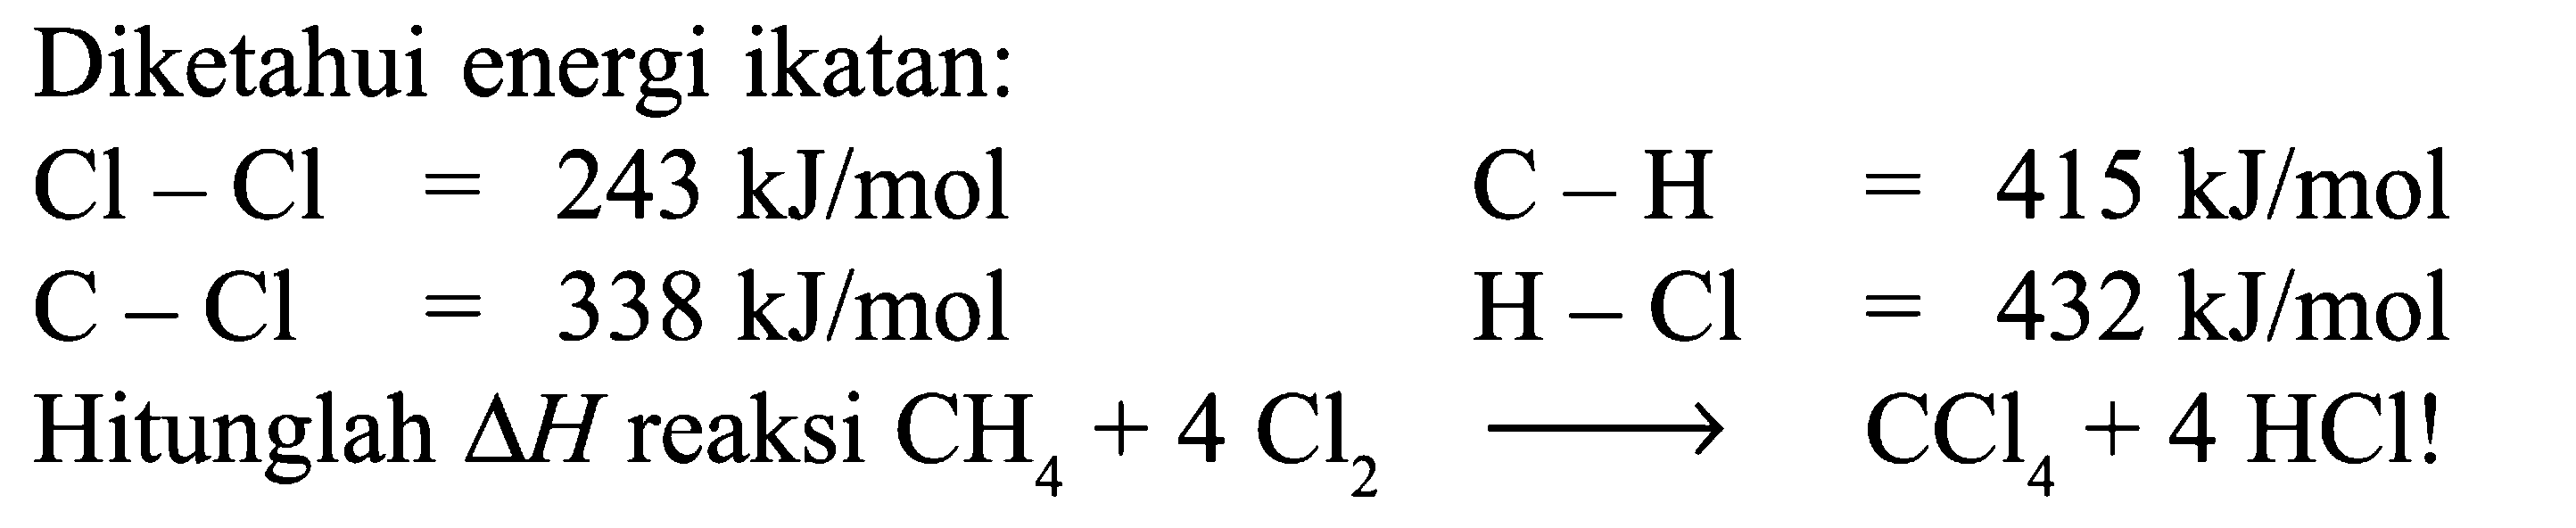 Diketahui energi ikatan: Cl - Cl = 243 kJ/mol C - H = 415 kJ/mol C - Cl = 338 kJ/mol H - Cl = 432 kJ/mol Hitunglah delta H reaksi CH4 + 4Cl2 -> CCl4 + 4 HCI!